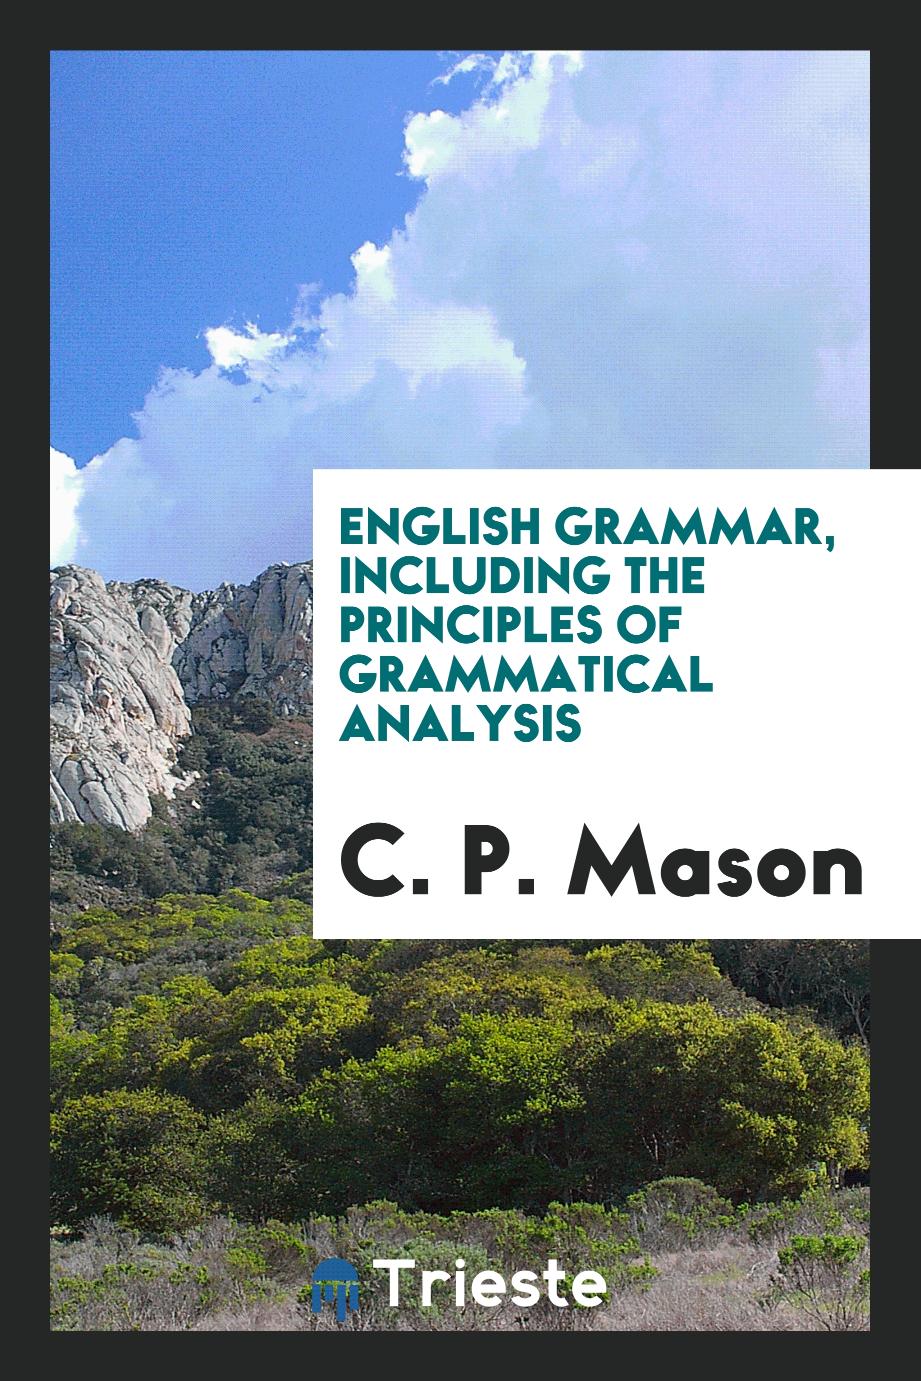 C. P. Mason - English Grammar, Including the Principles of Grammatical Analysis